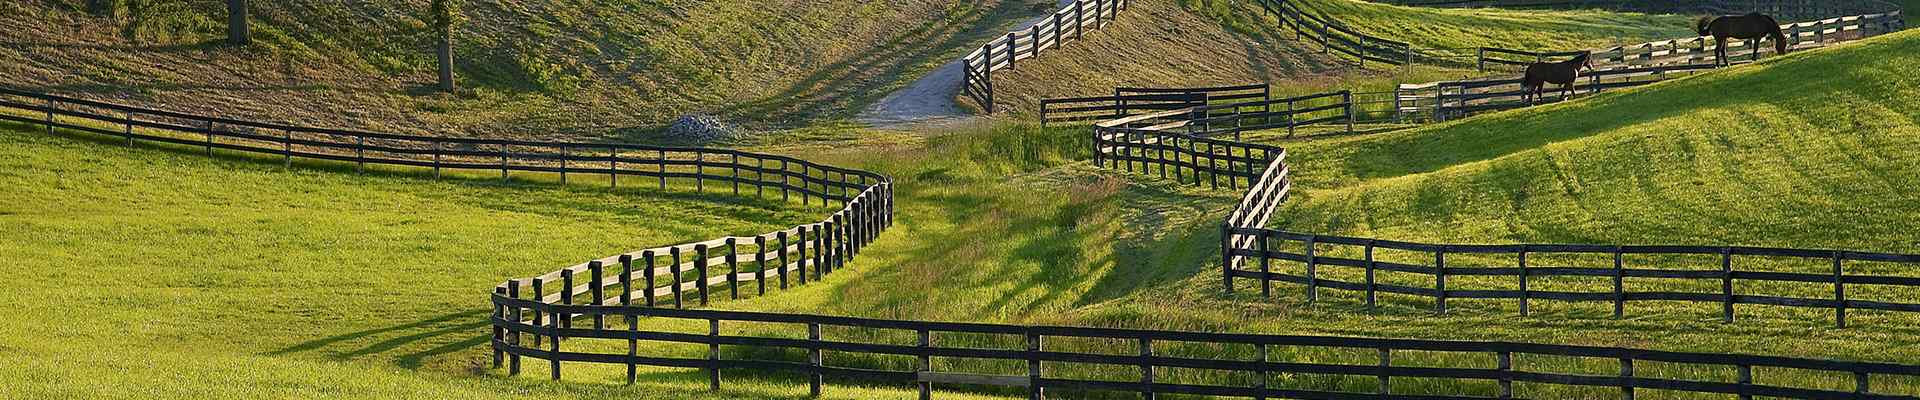 large fenced in pastures in van alstyne texas